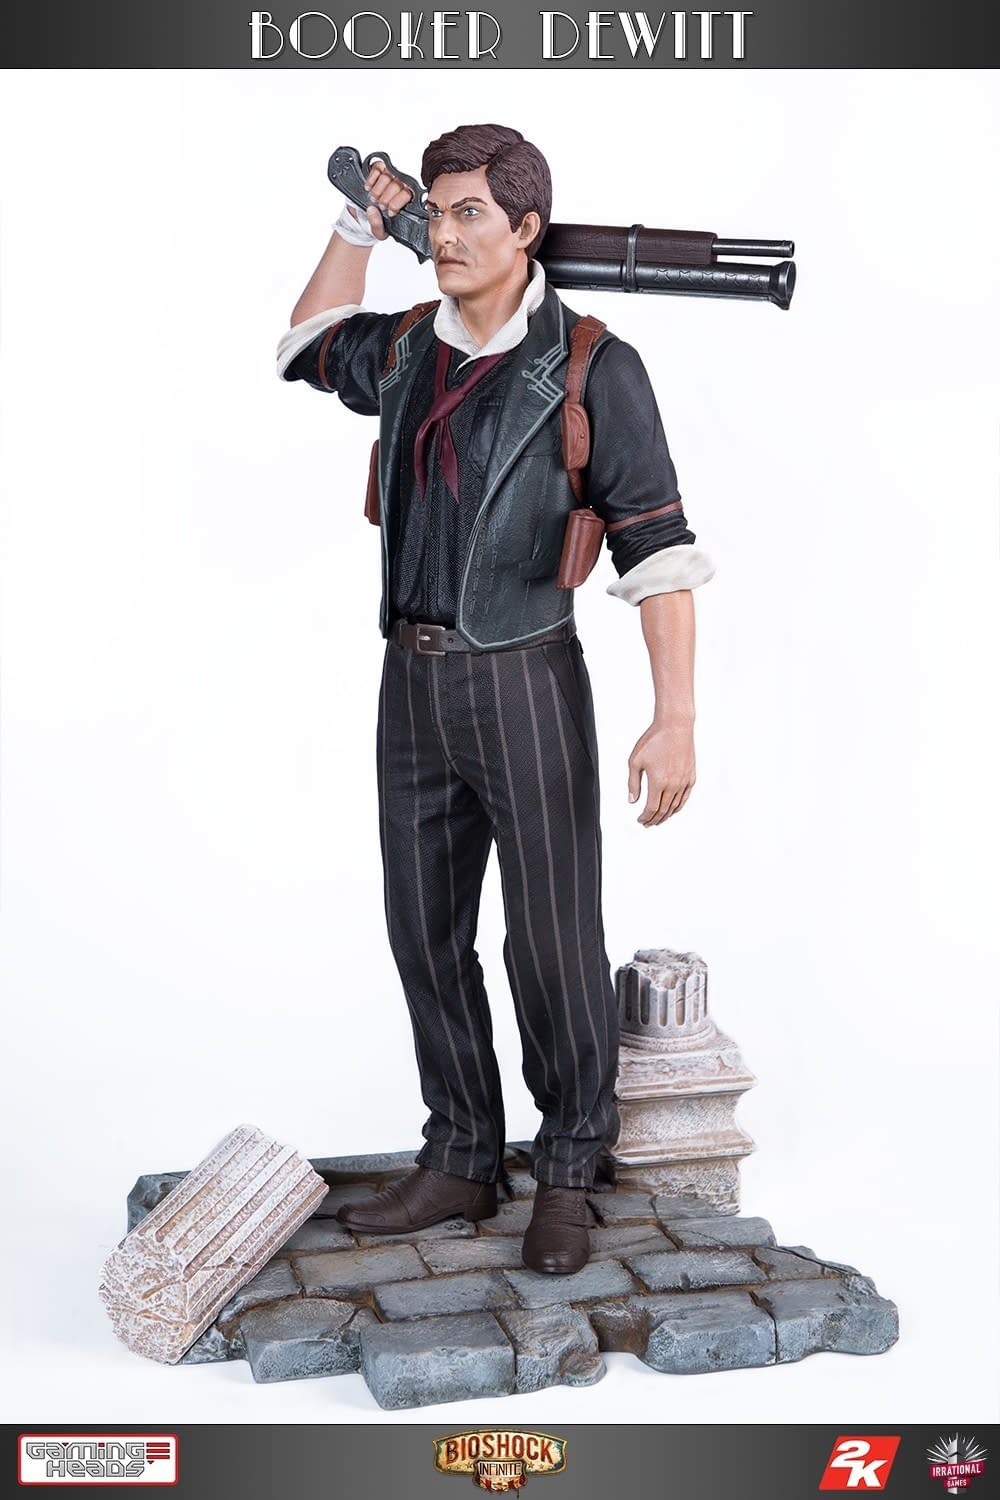 BioShock Infinite figurines hit stores Jan. 2013 - Polygon